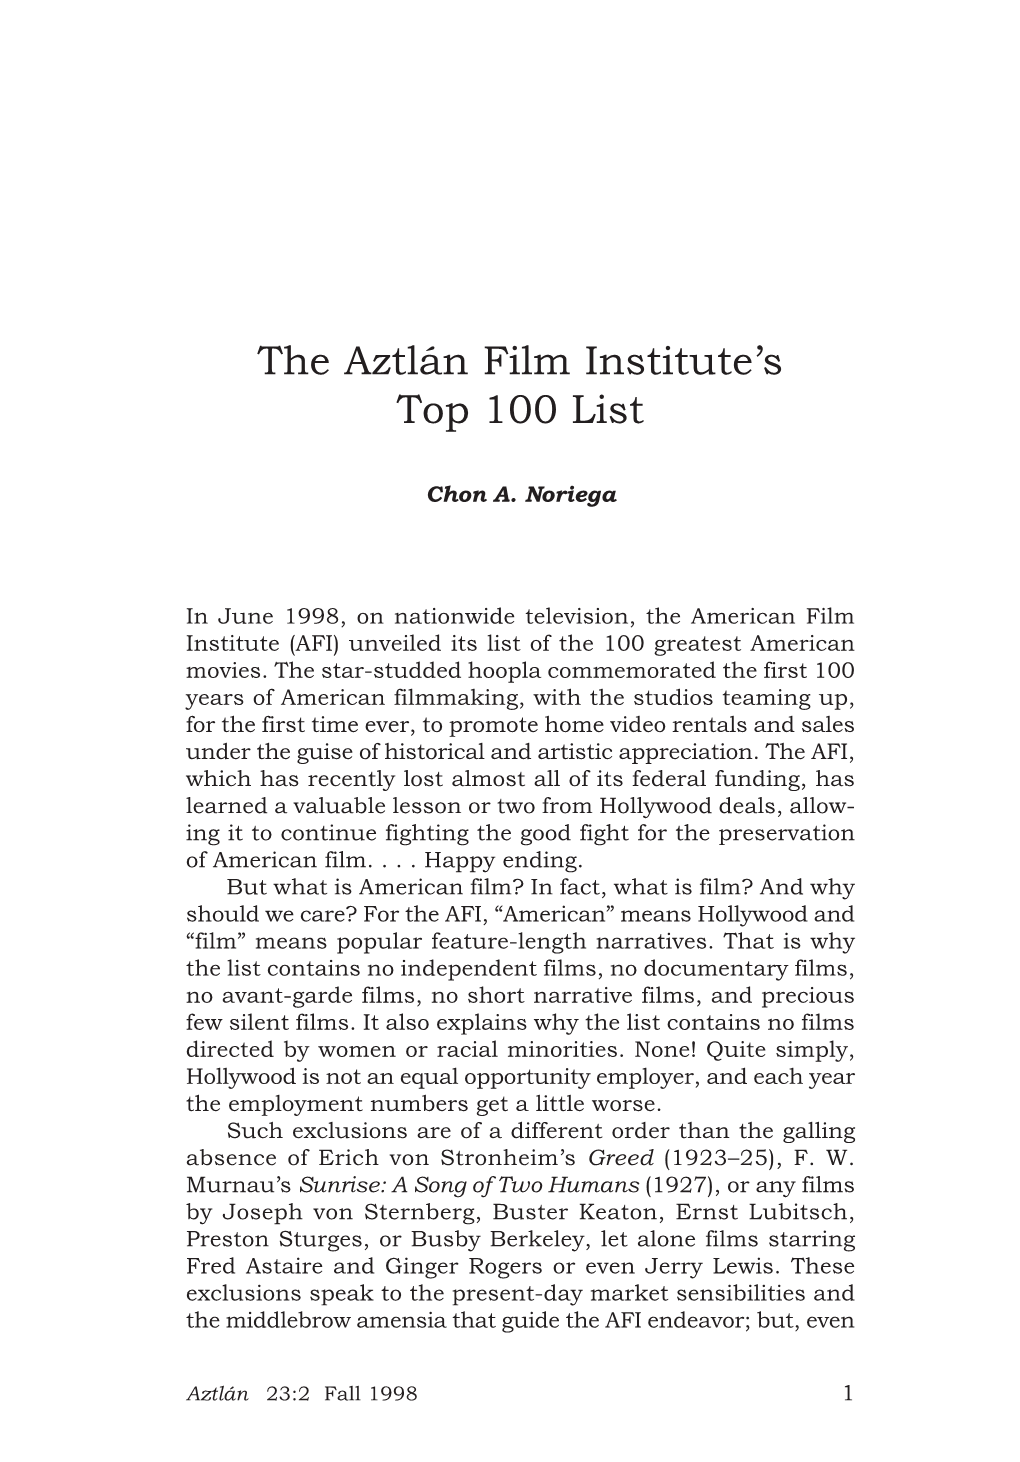 The Aztlán Film Institute's Top 100 List